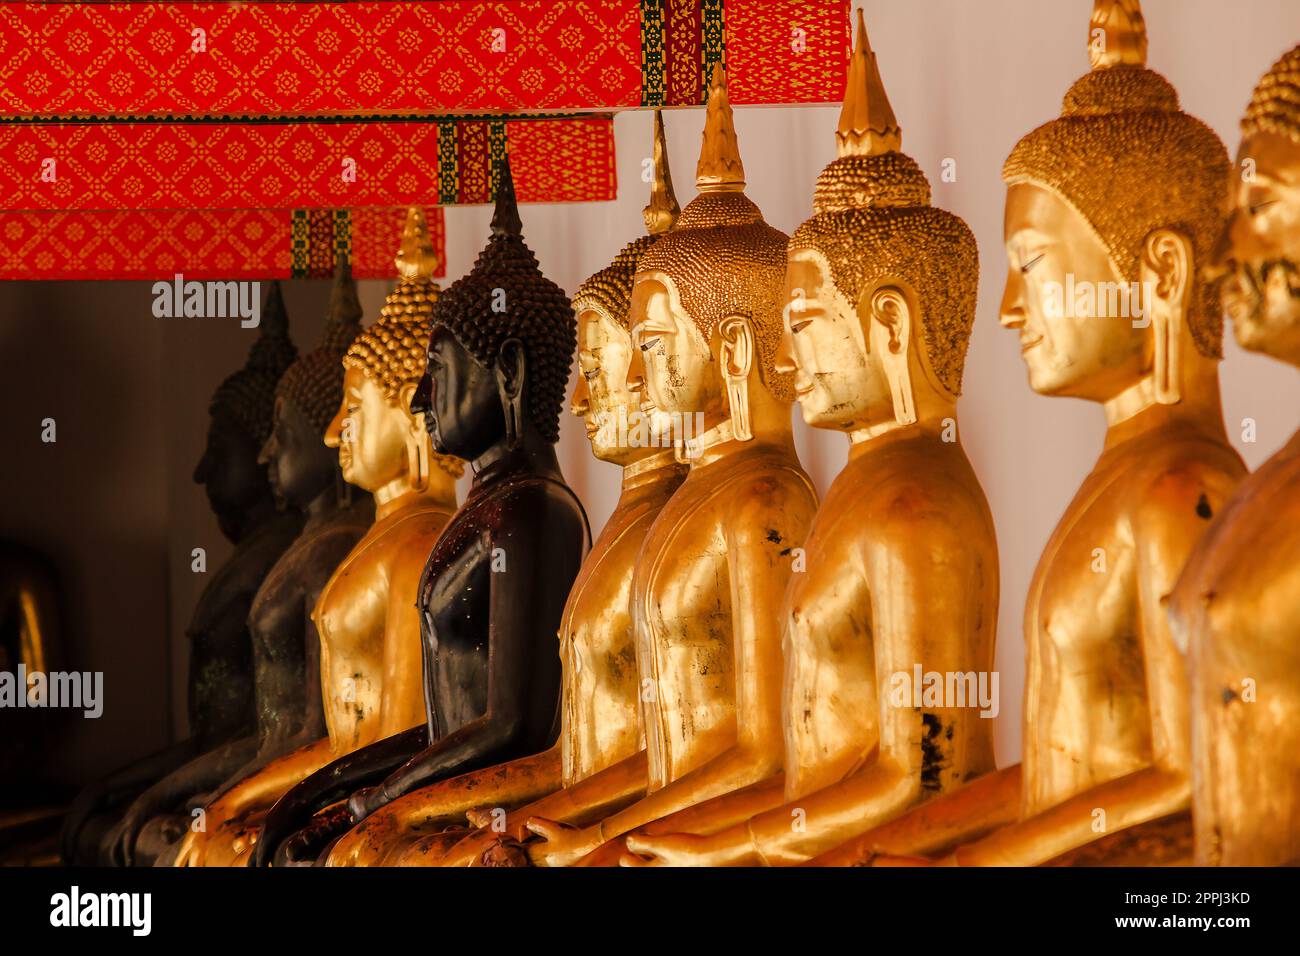 The Golden Buddha is beautiful that Buddhists worship. Stock Photo